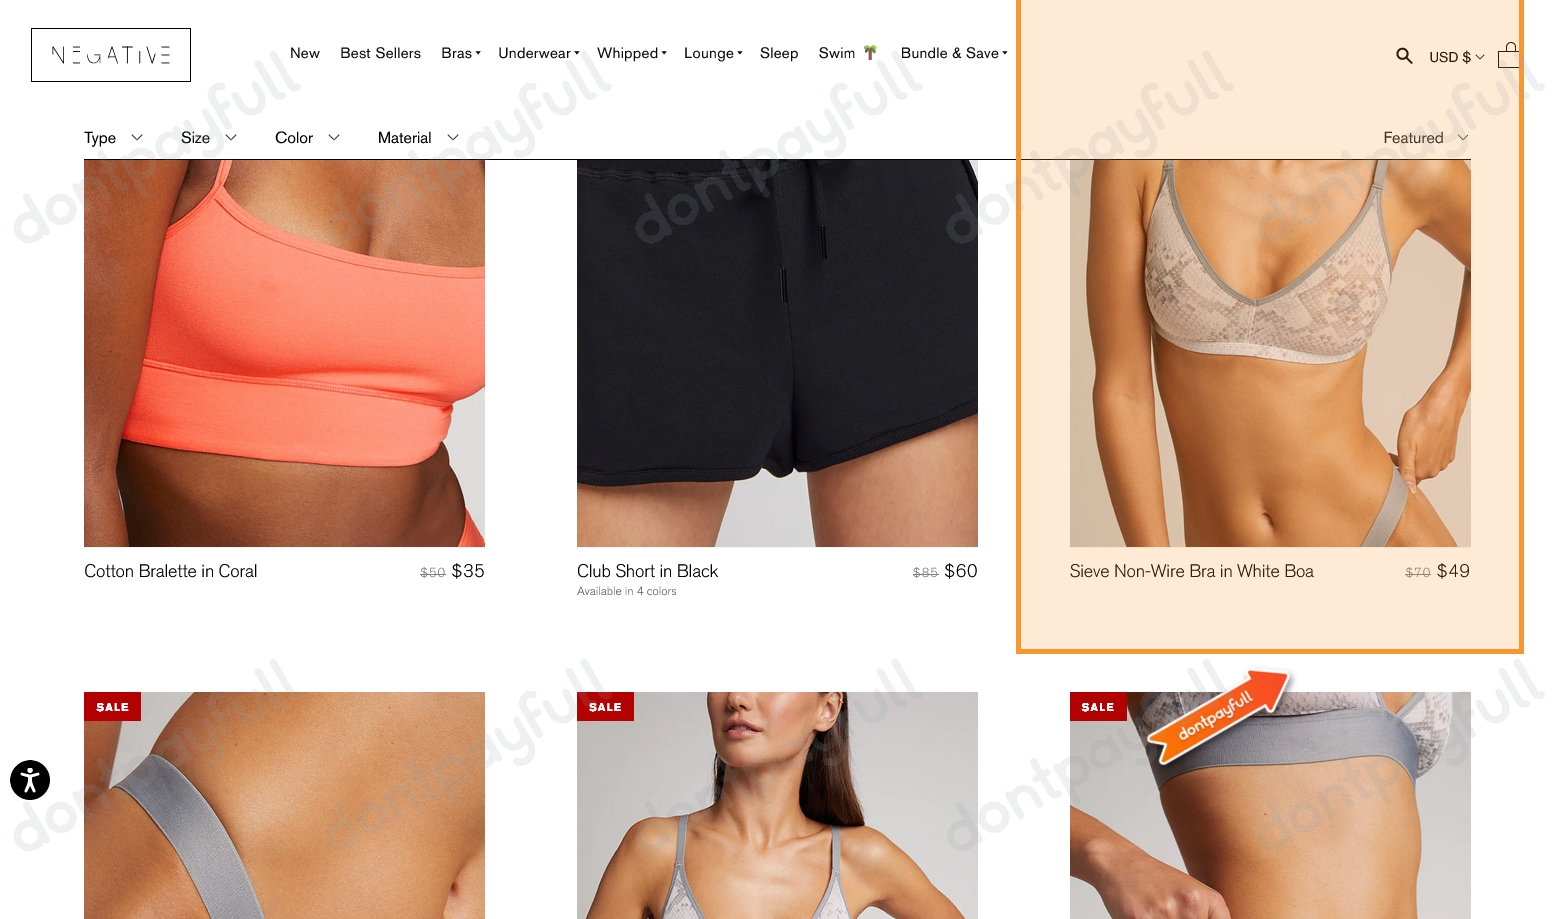 Does Negative Underwear accept Afterpay financing? — Knoji